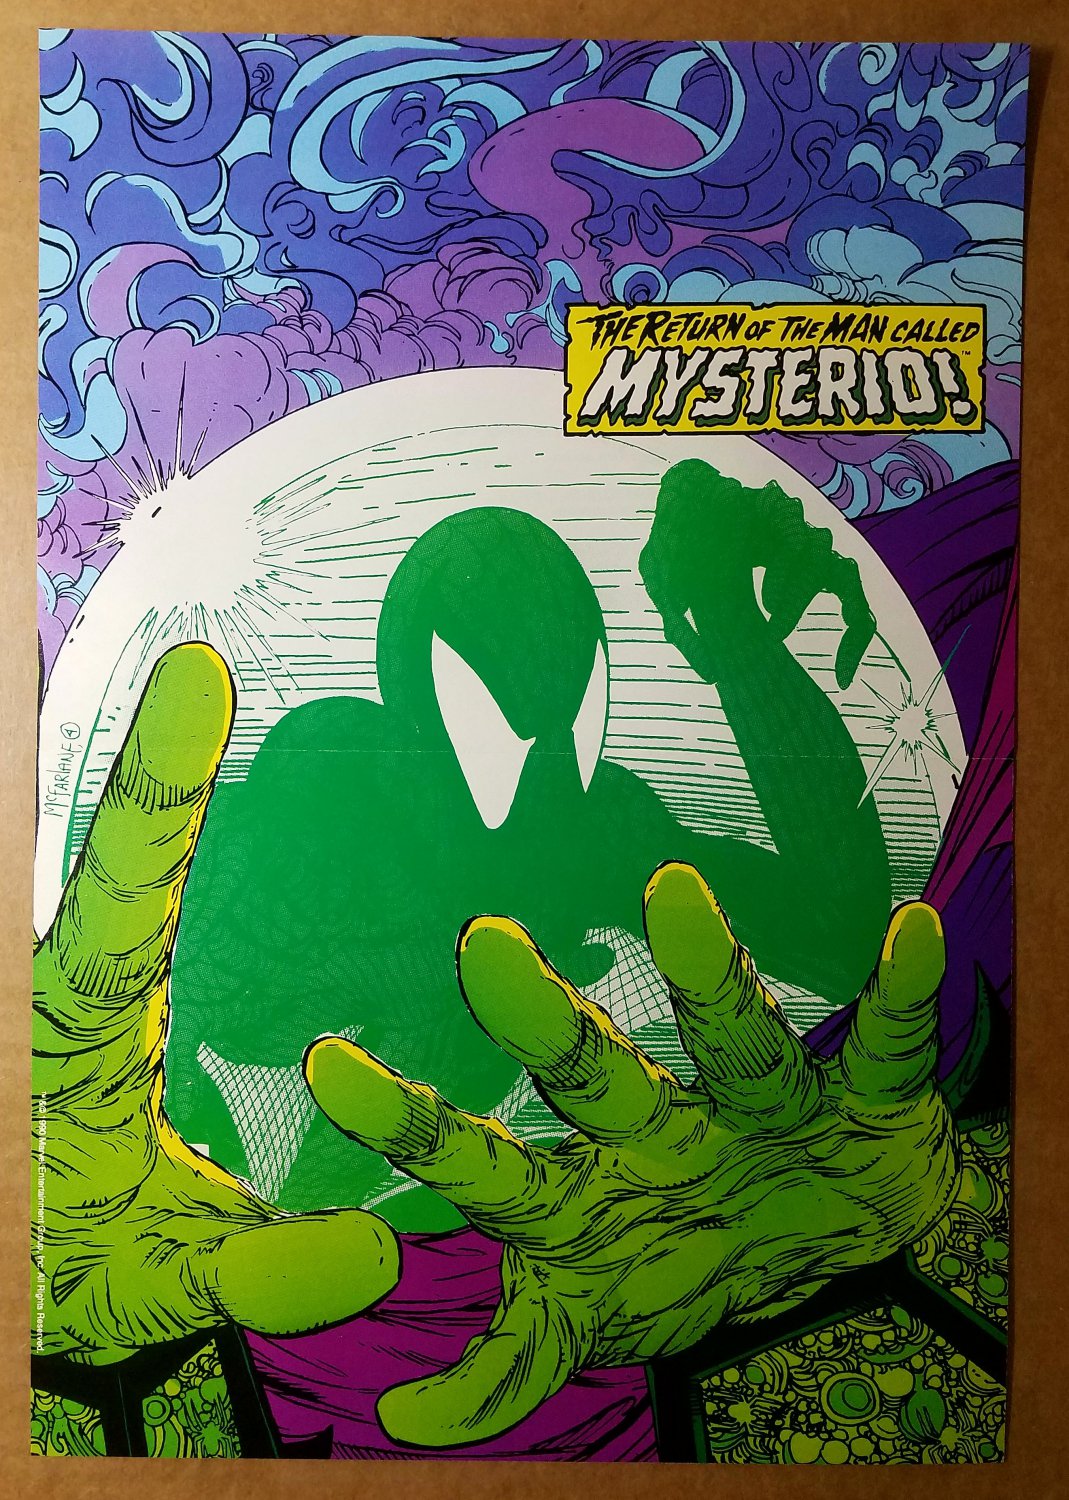 Amazing Spider-Man Vs Mysterio Marvel Comics Poster by Todd McFarlane